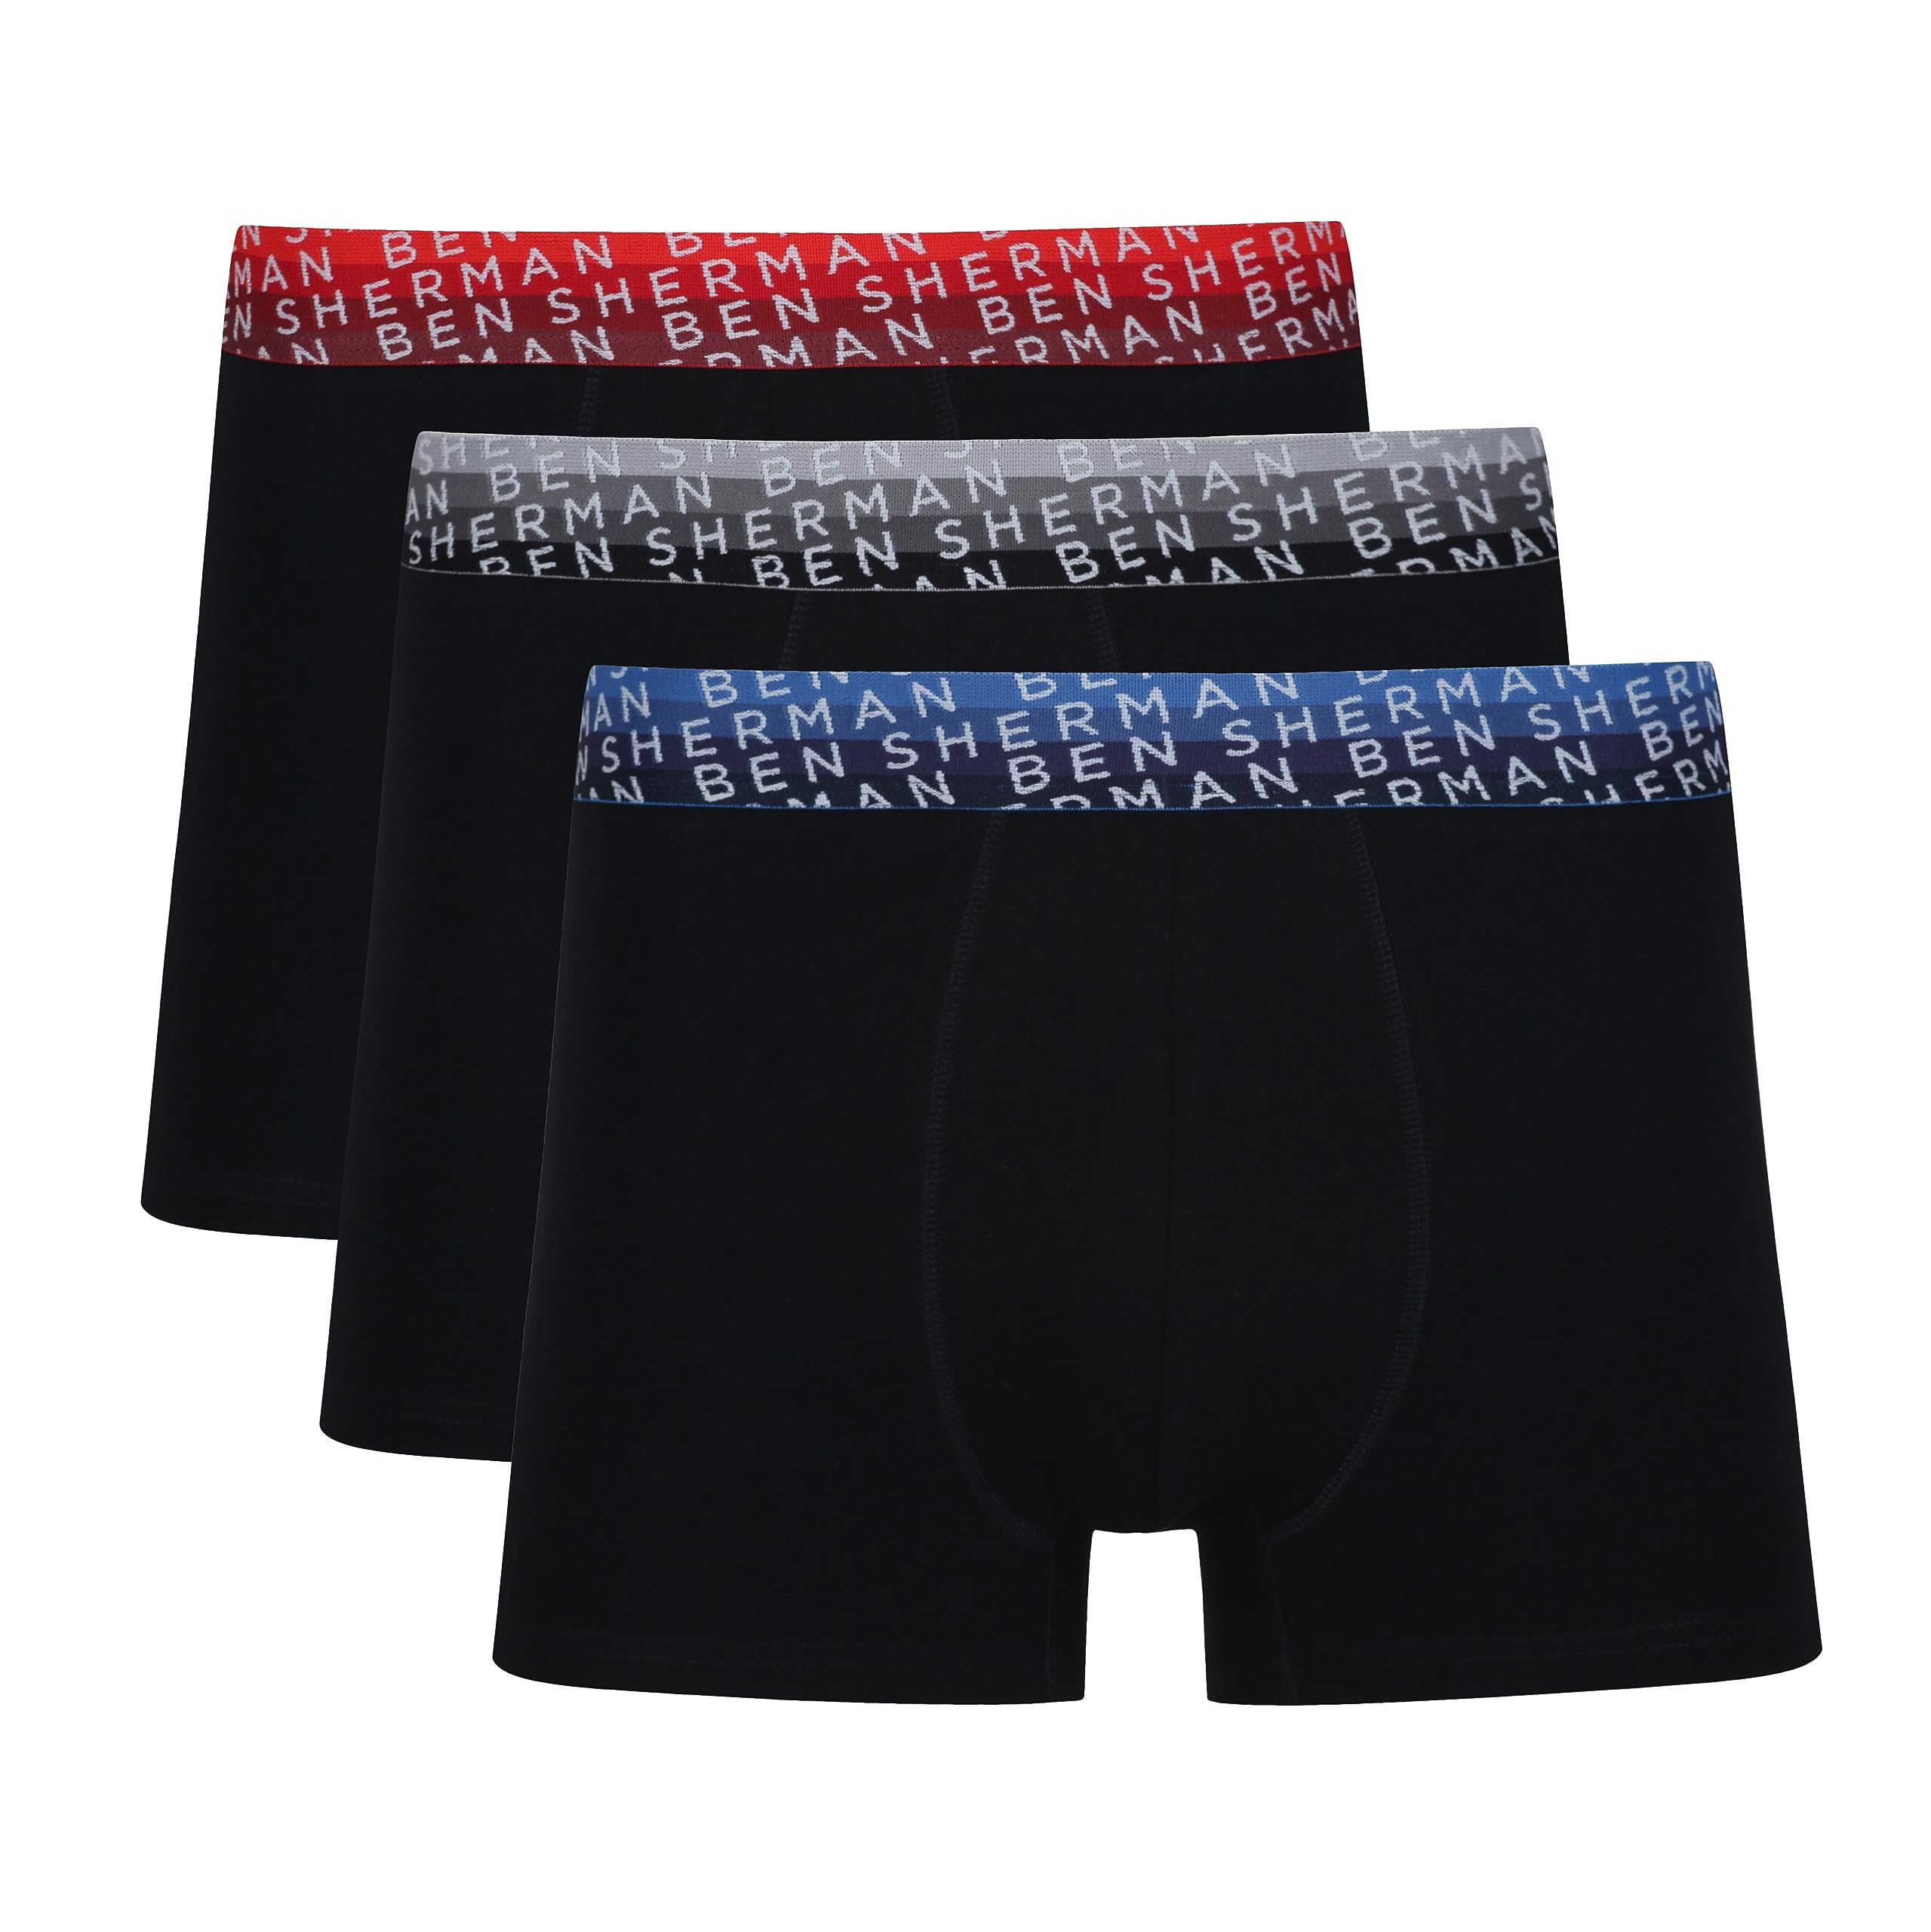 Ben Sherman Underwear Men's Ben Sherman Black | Soft Touch Cotton Rich Trunks with Elasticated Waistband Boxer Shorts, Schwarz, L